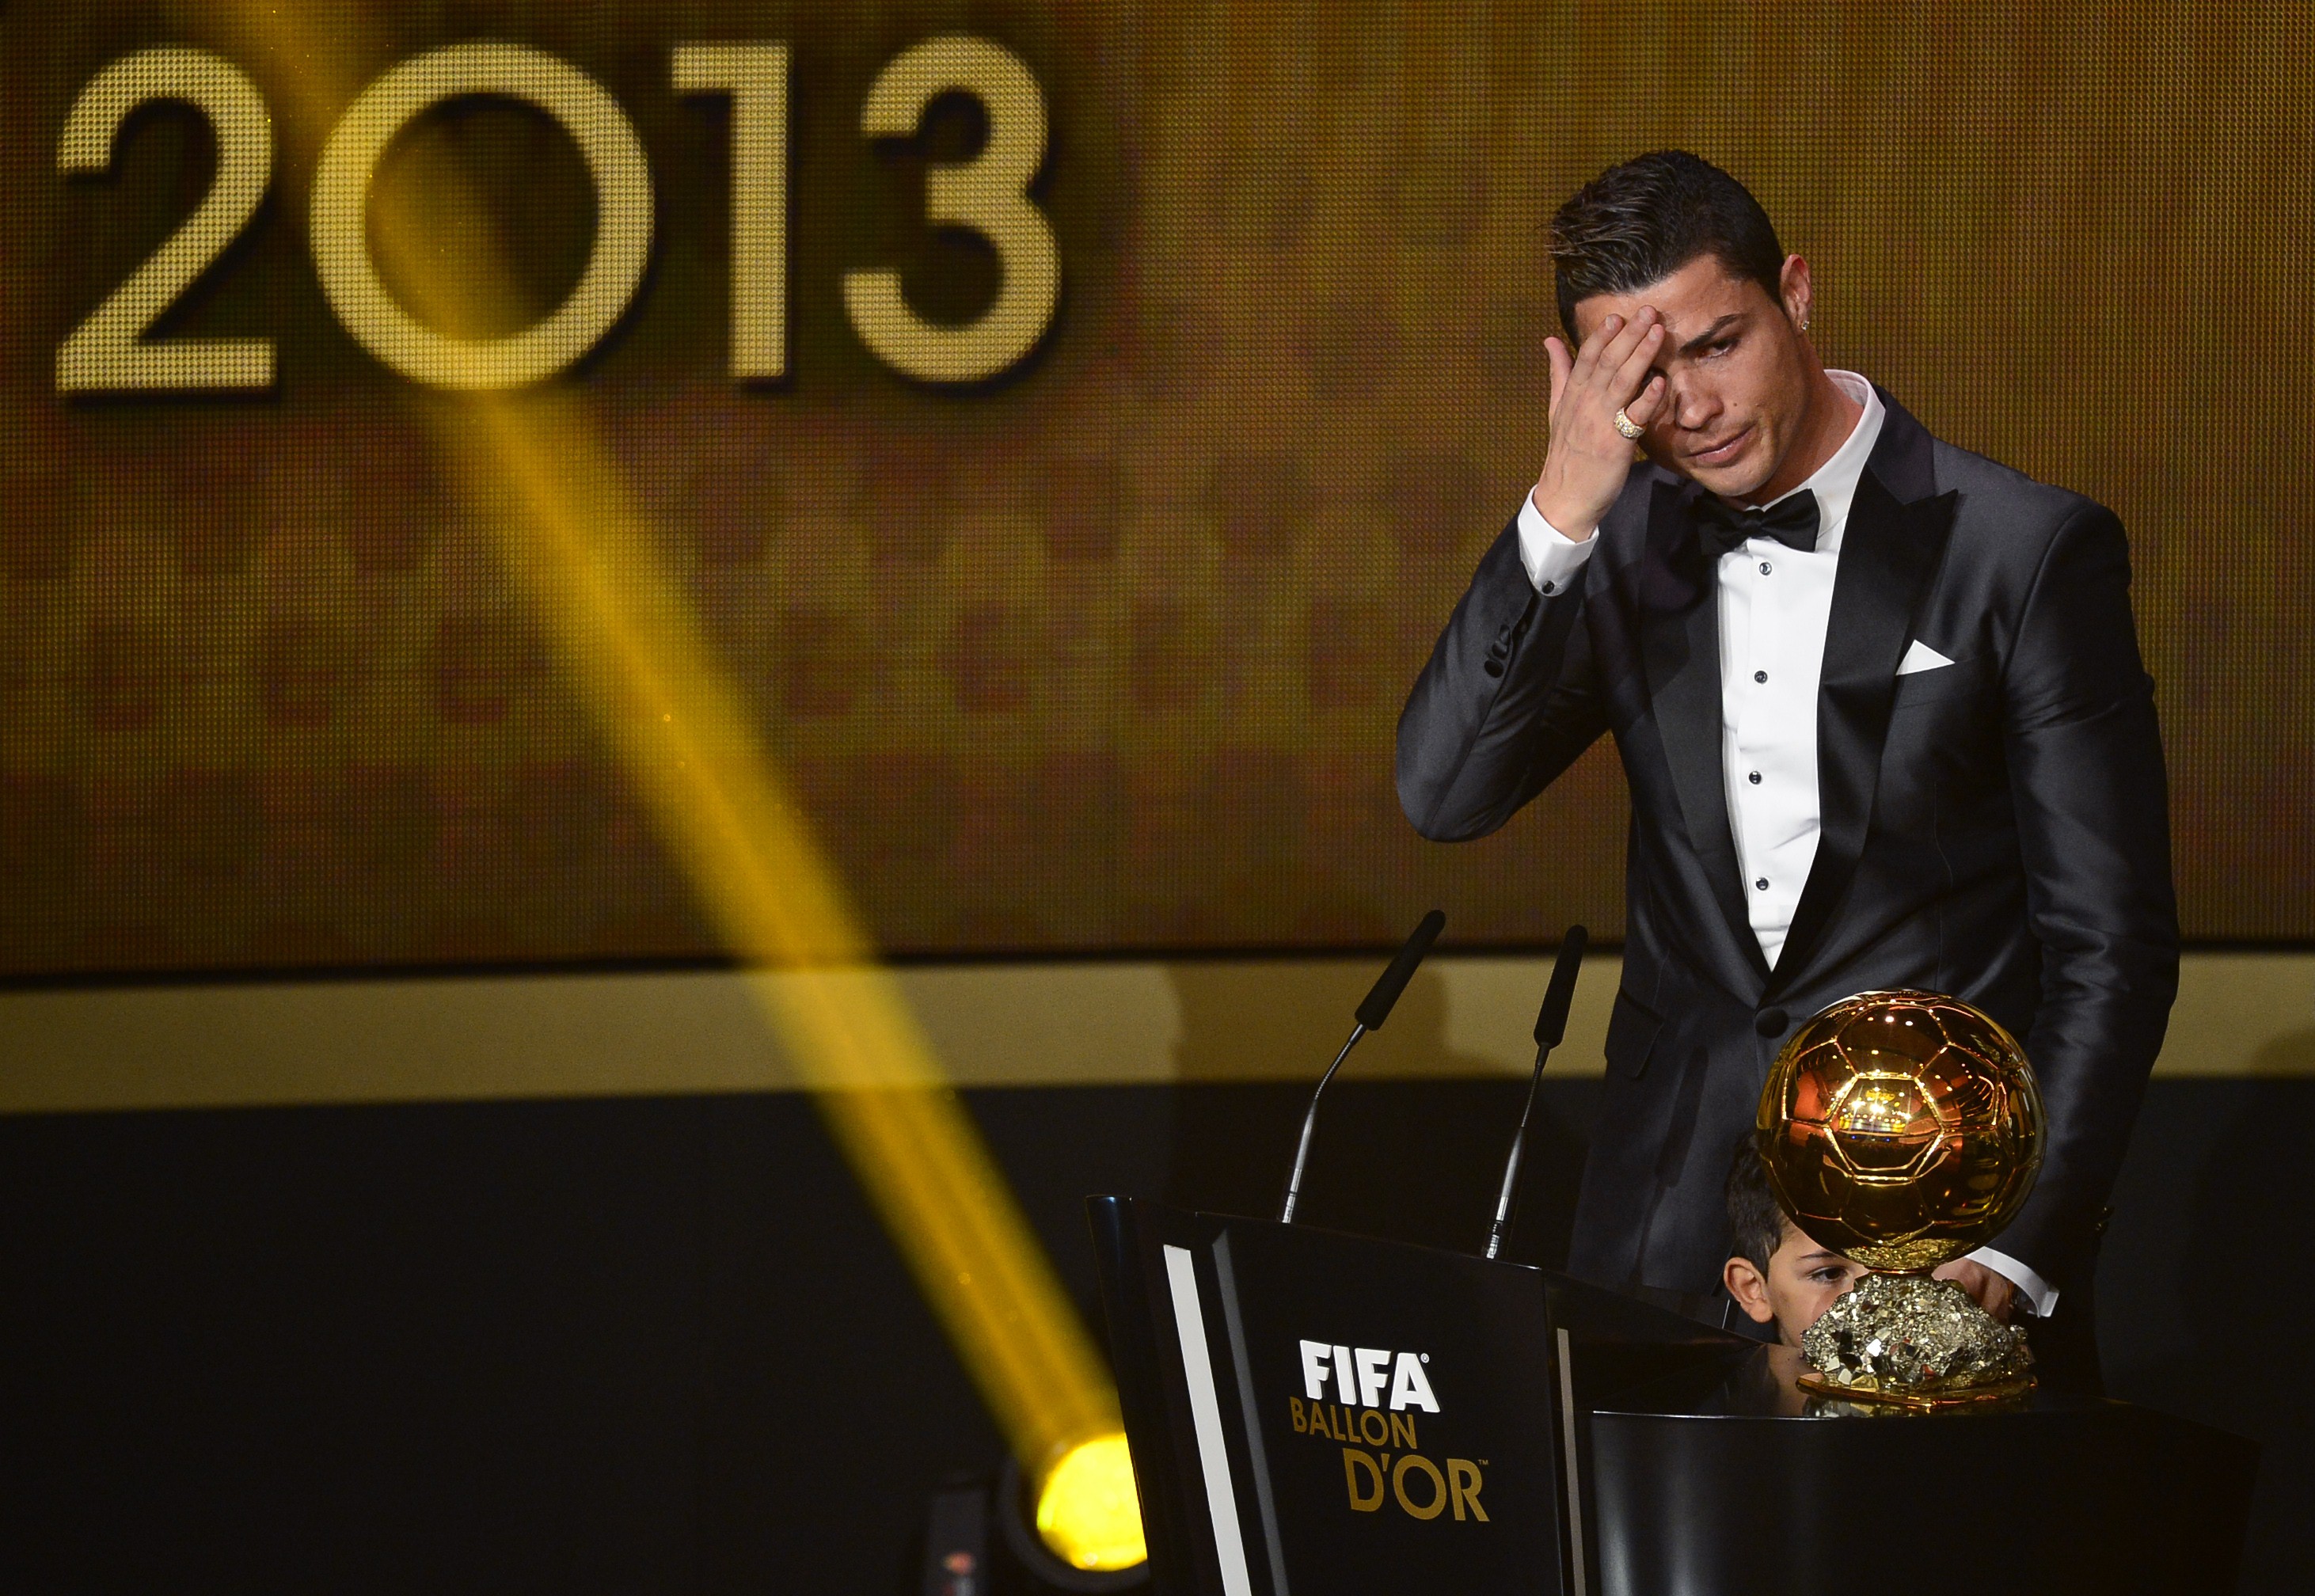 Ballon d'or 2013 : Cristiano Ronaldo vainqueur devant Lionel Messi et Franck Ribéry